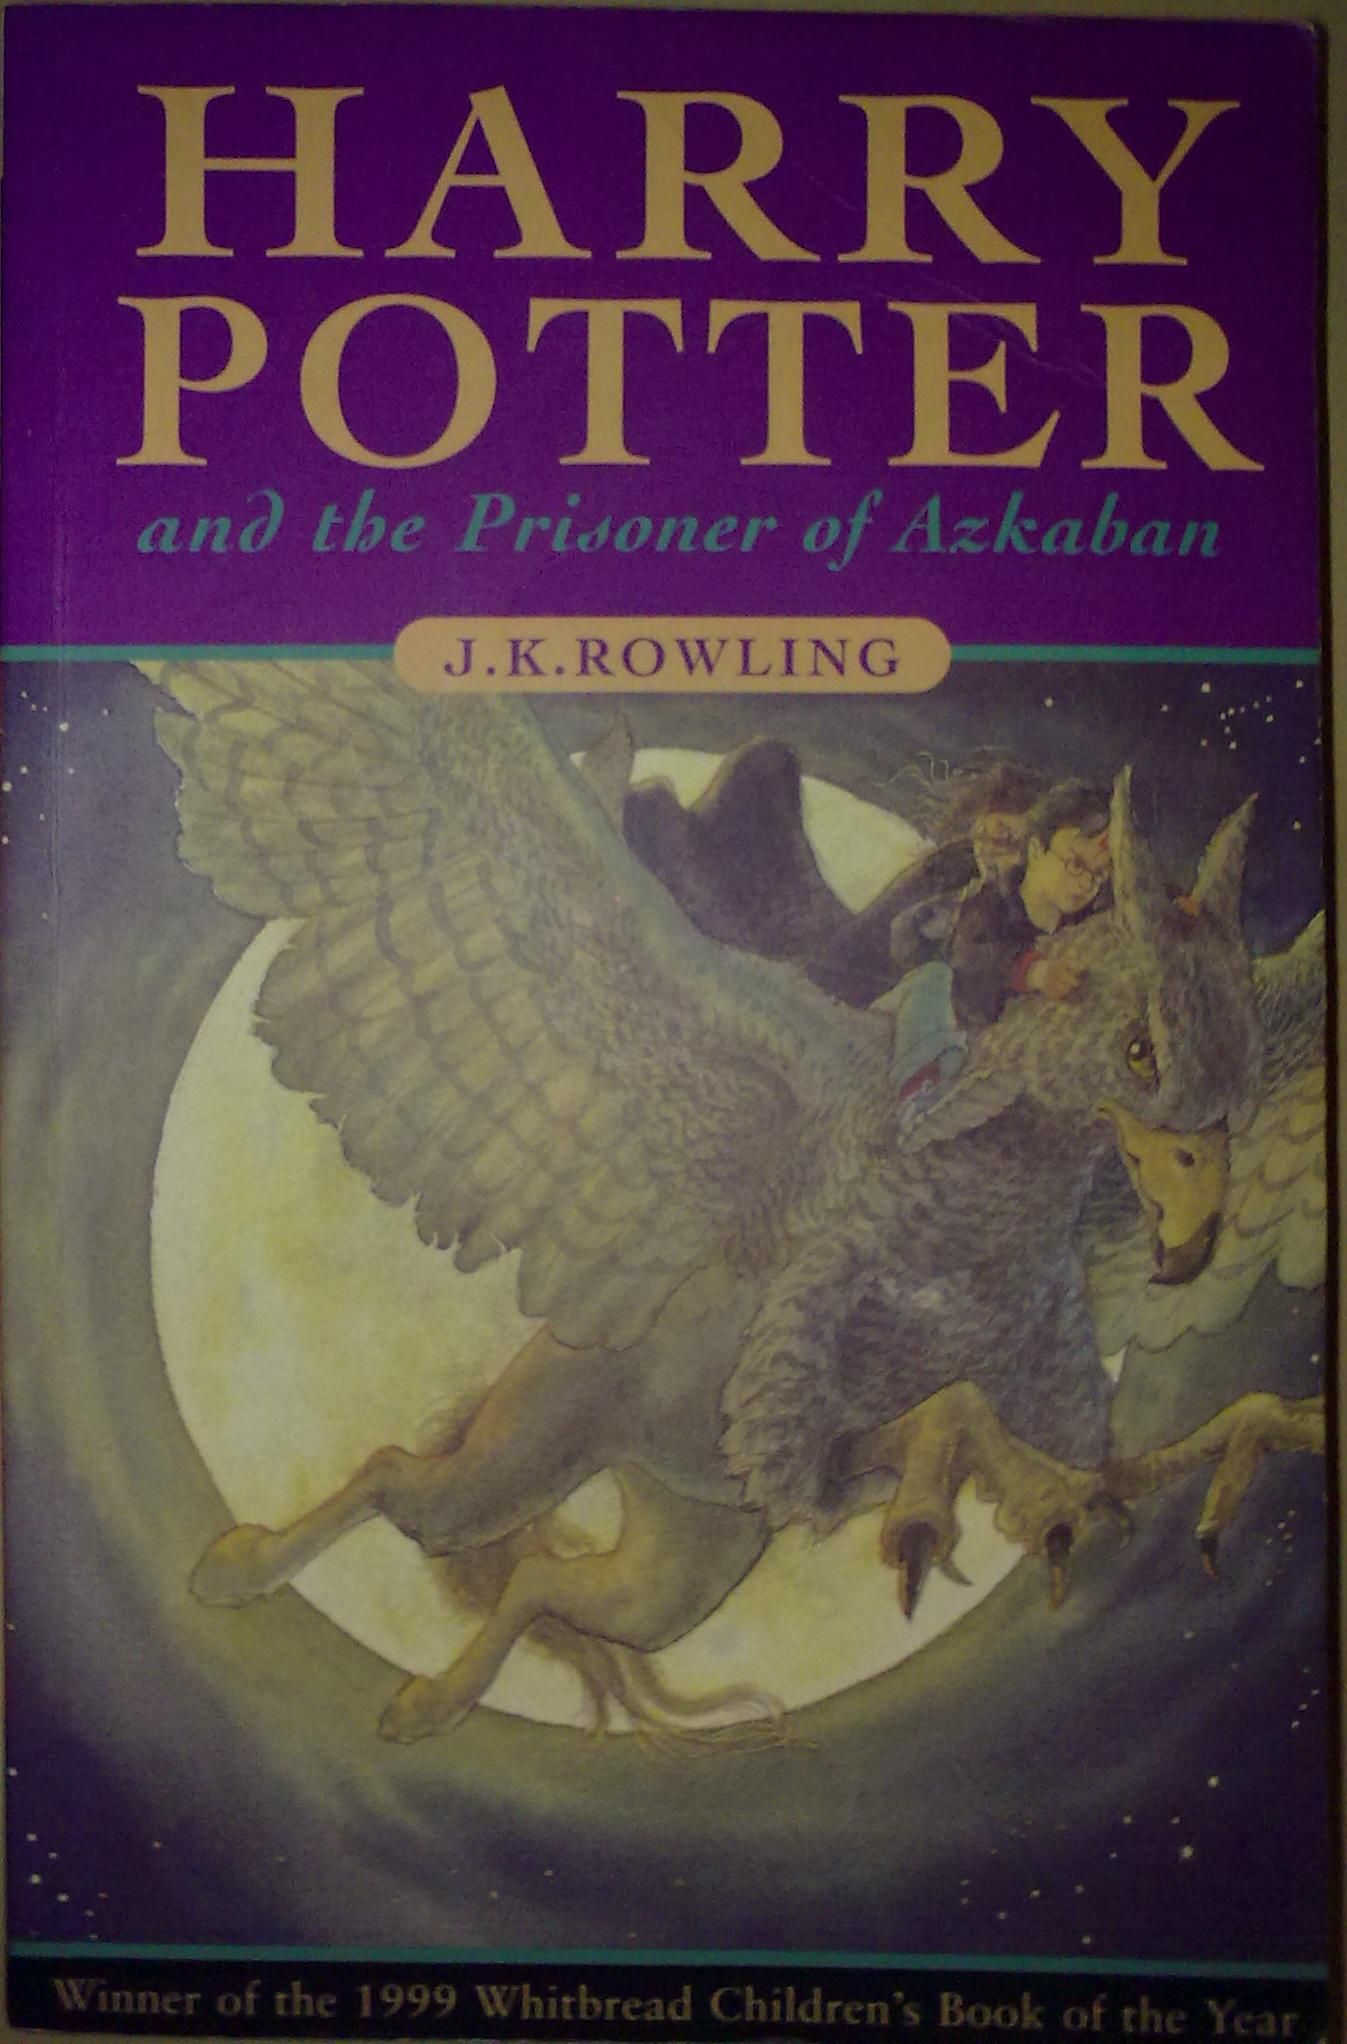 Harry potter book 3 pdf